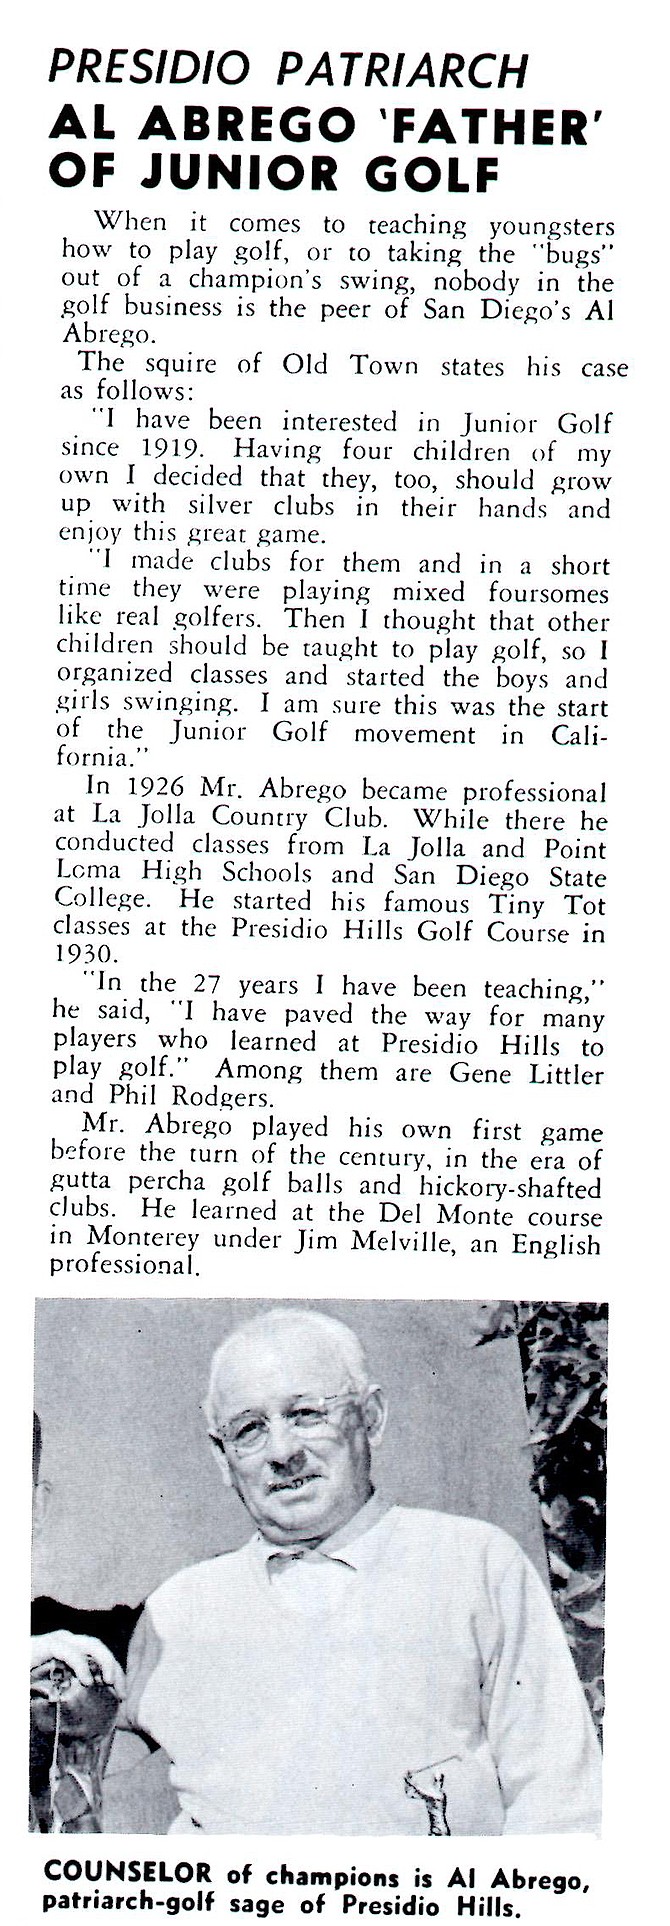 Many have fond memories of when Presidio Hills had a vibrant junior golf program thanks to Al Abrego. 